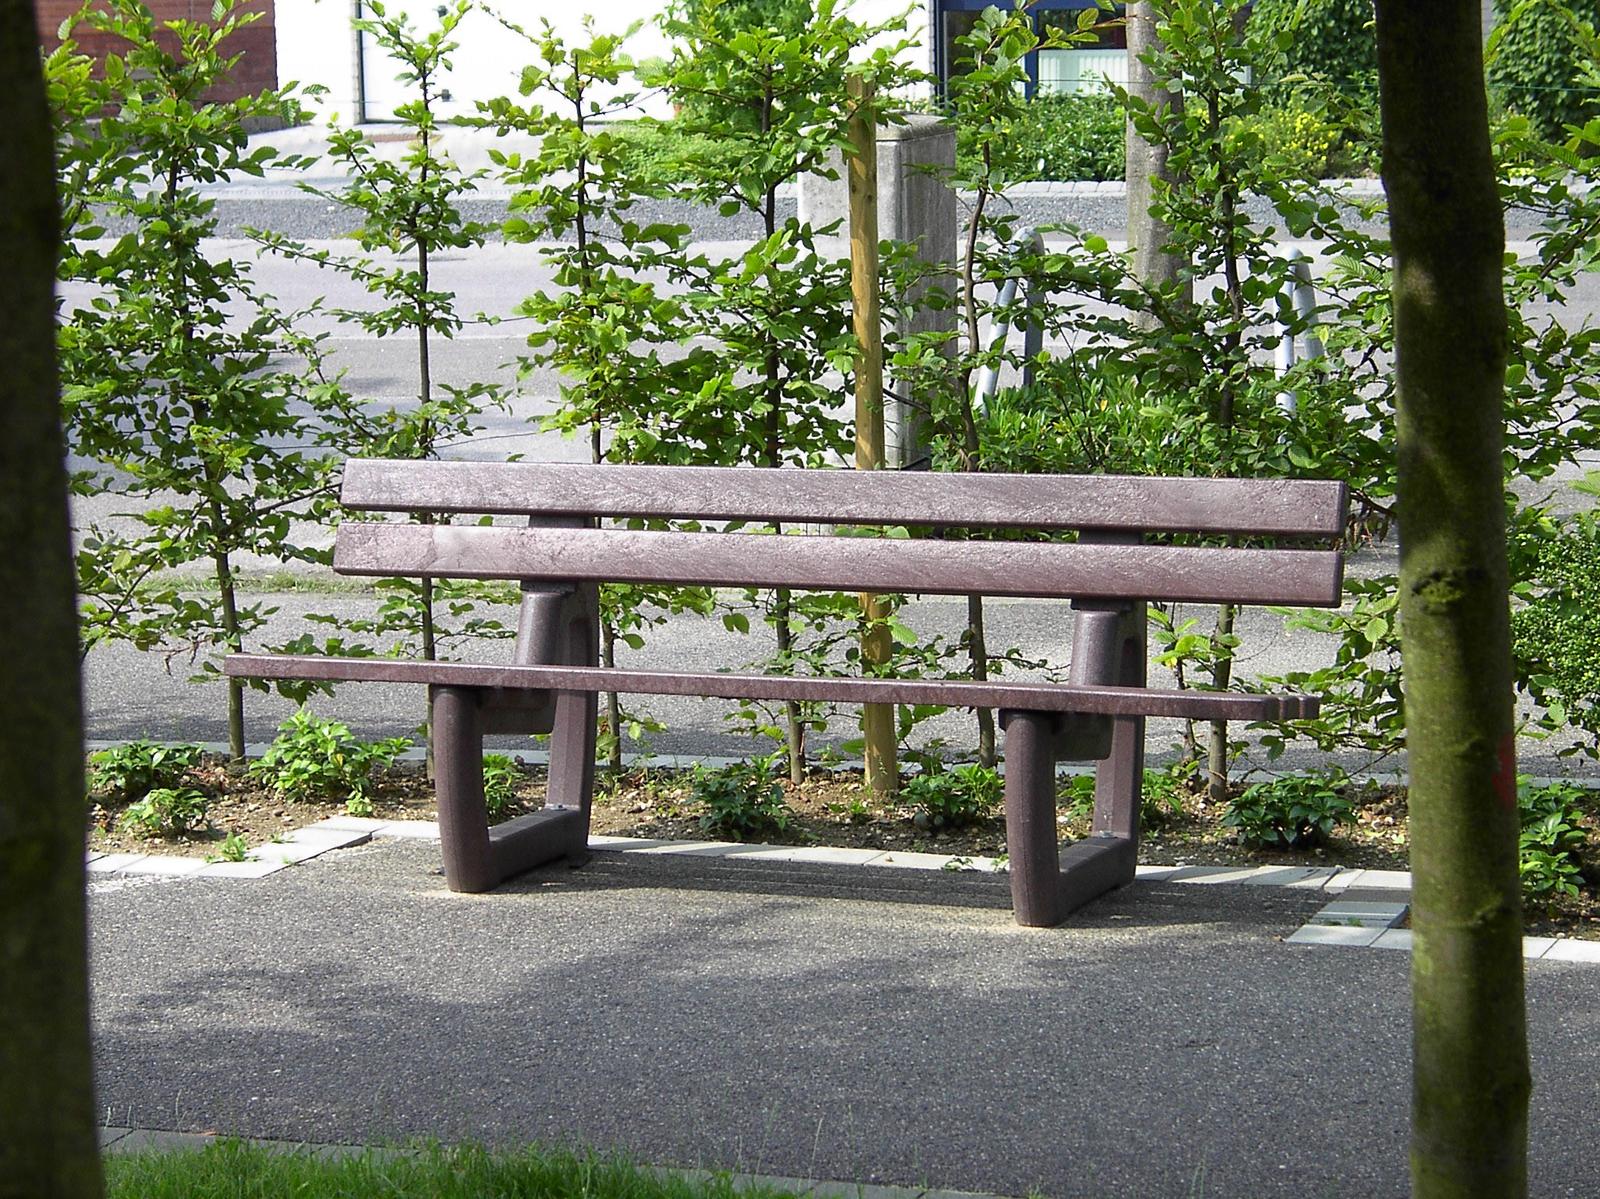 Tivoli bench